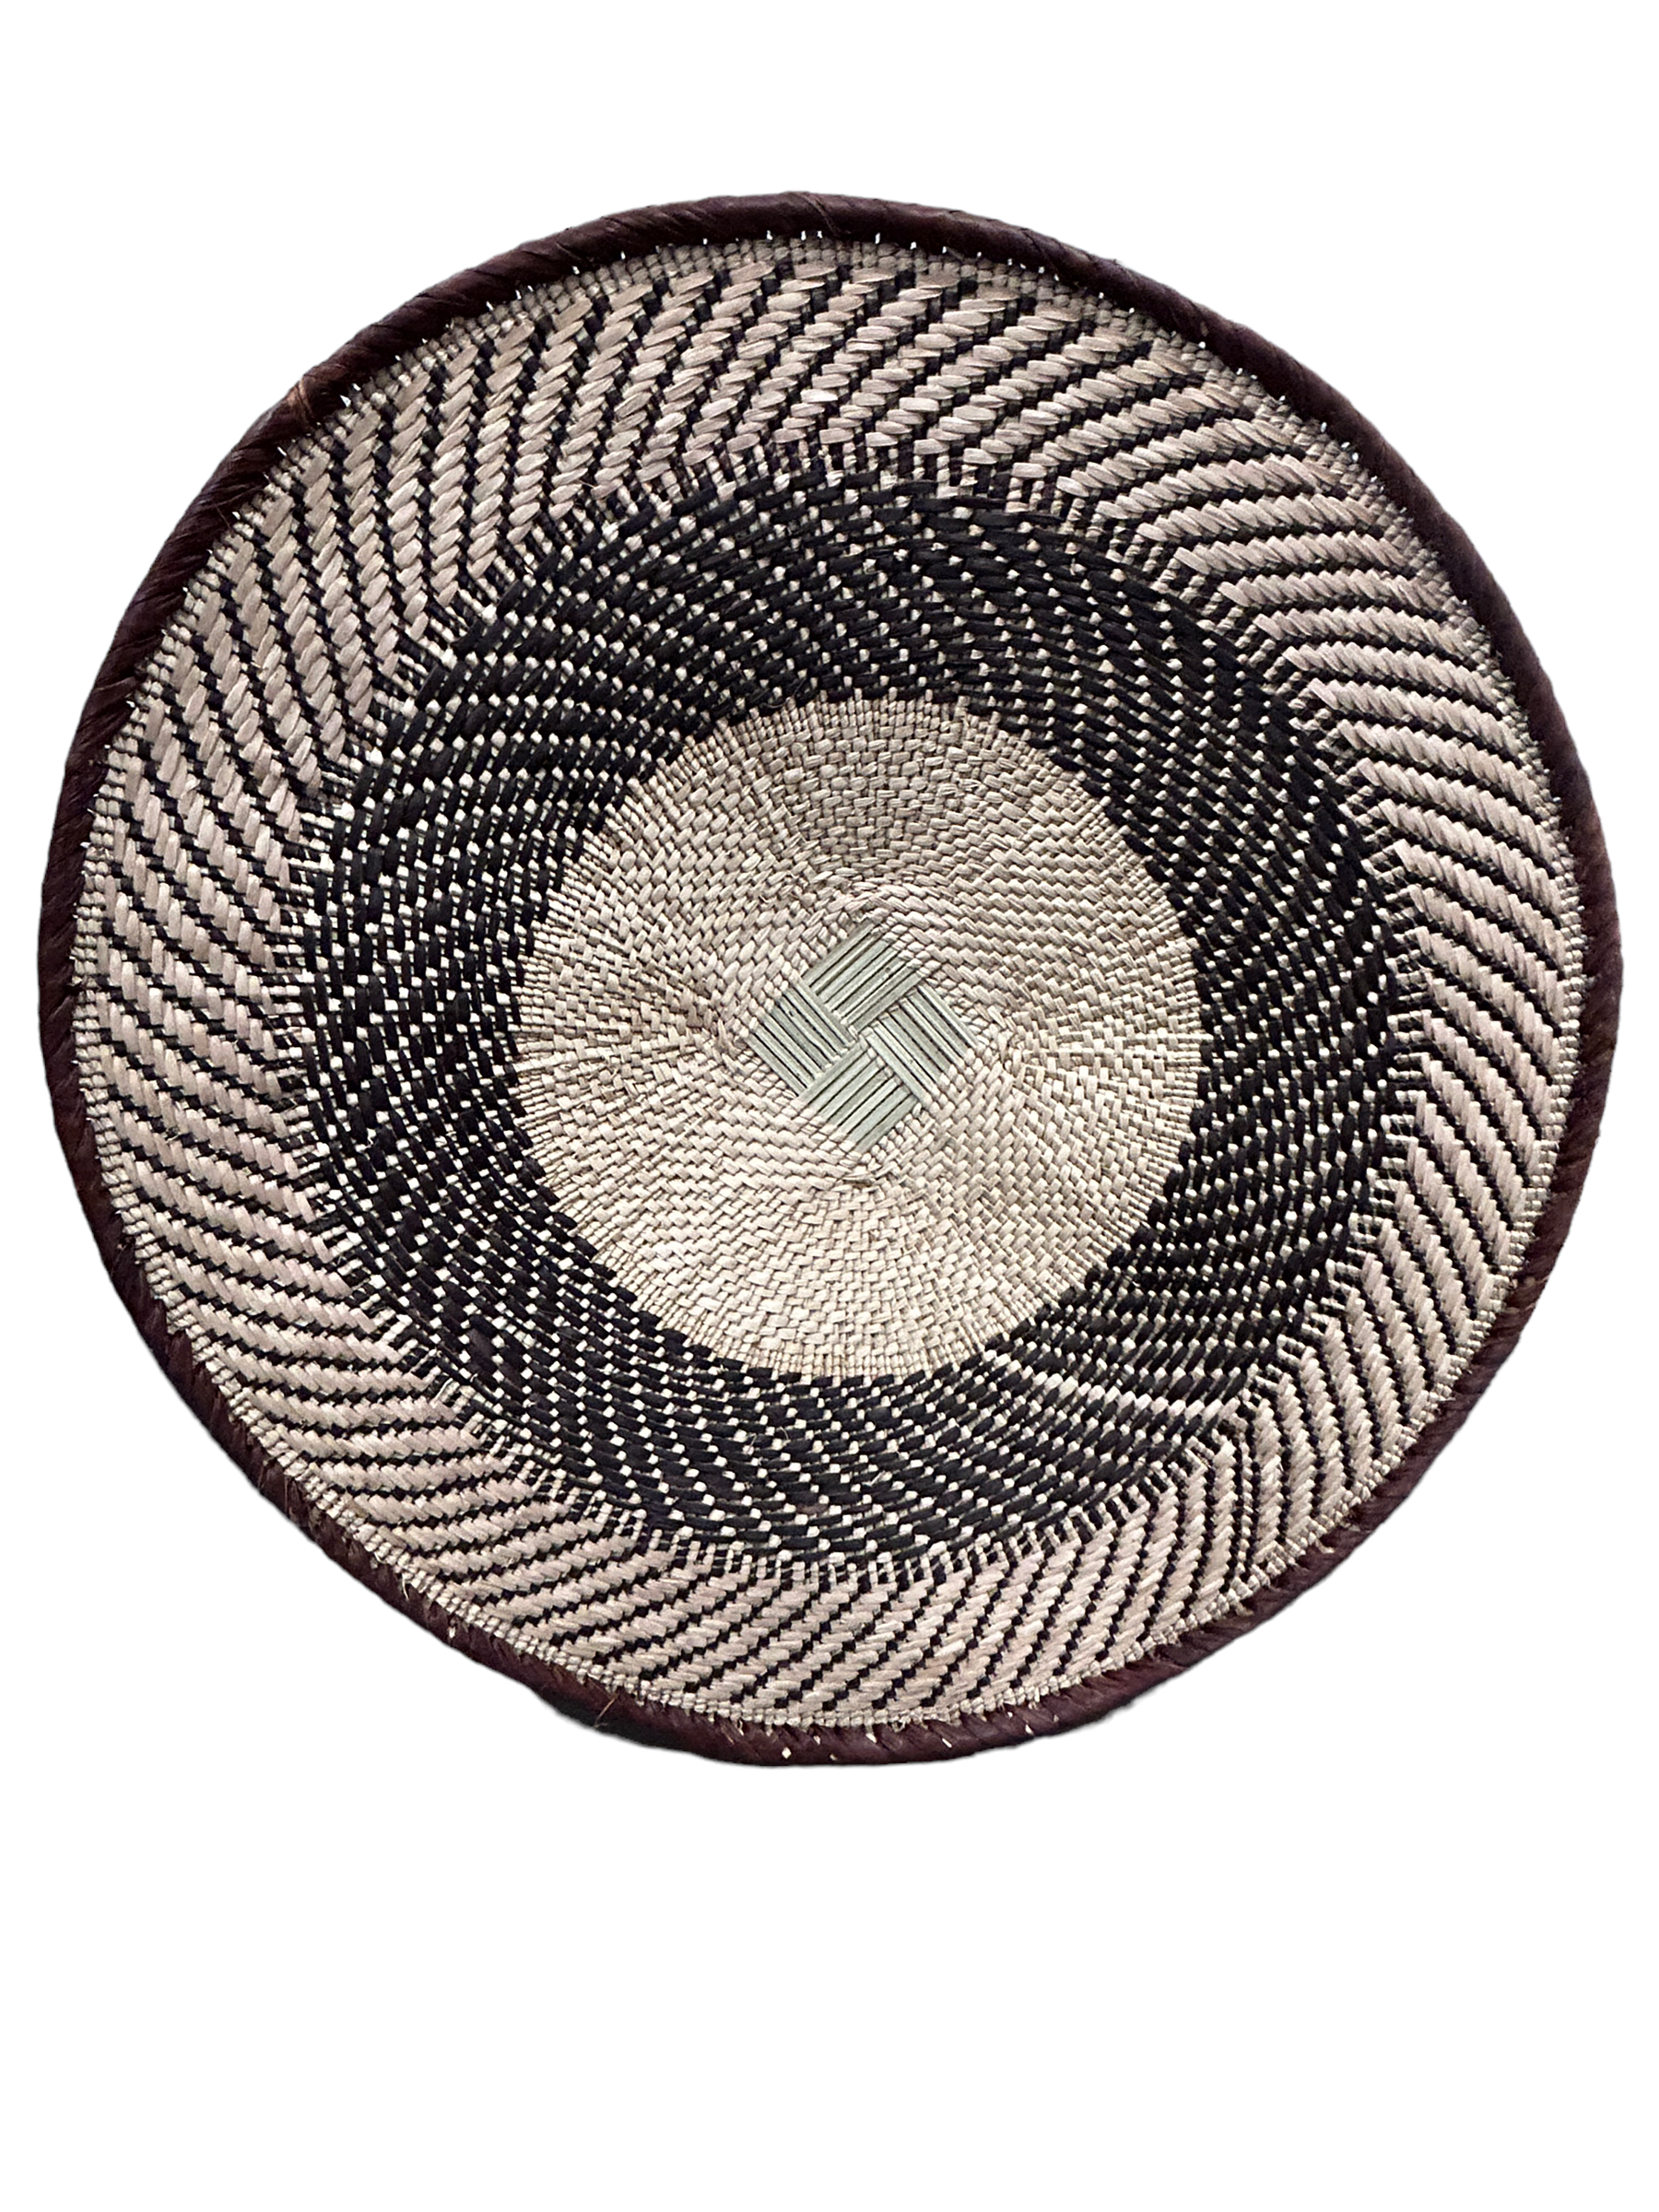 botanicalboysuk Tonga Basket Natural (45-15)